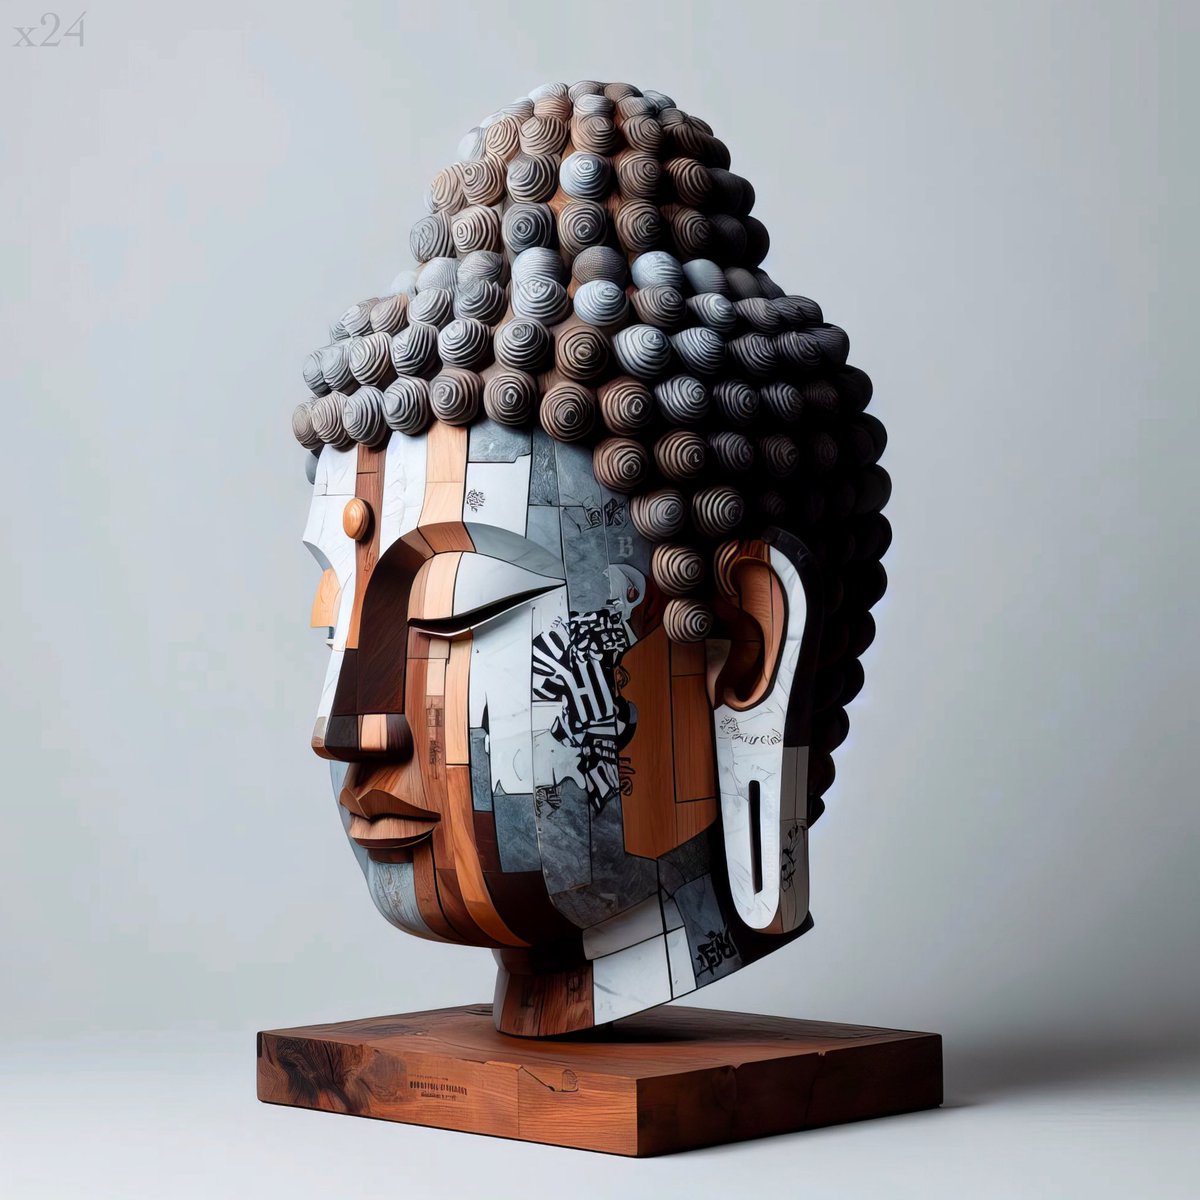 Peace of mind. 💡🛠️🗿📿
#peace #peaceful #buddha #buddhastatue #peacefulart #buddhaartwork #art #artdaily #artoftheday #digitalart #digitalartist #ai #aiart #aiartcommunity #sculpture #sculptureart #statue #obscure #obscureart #obscure24